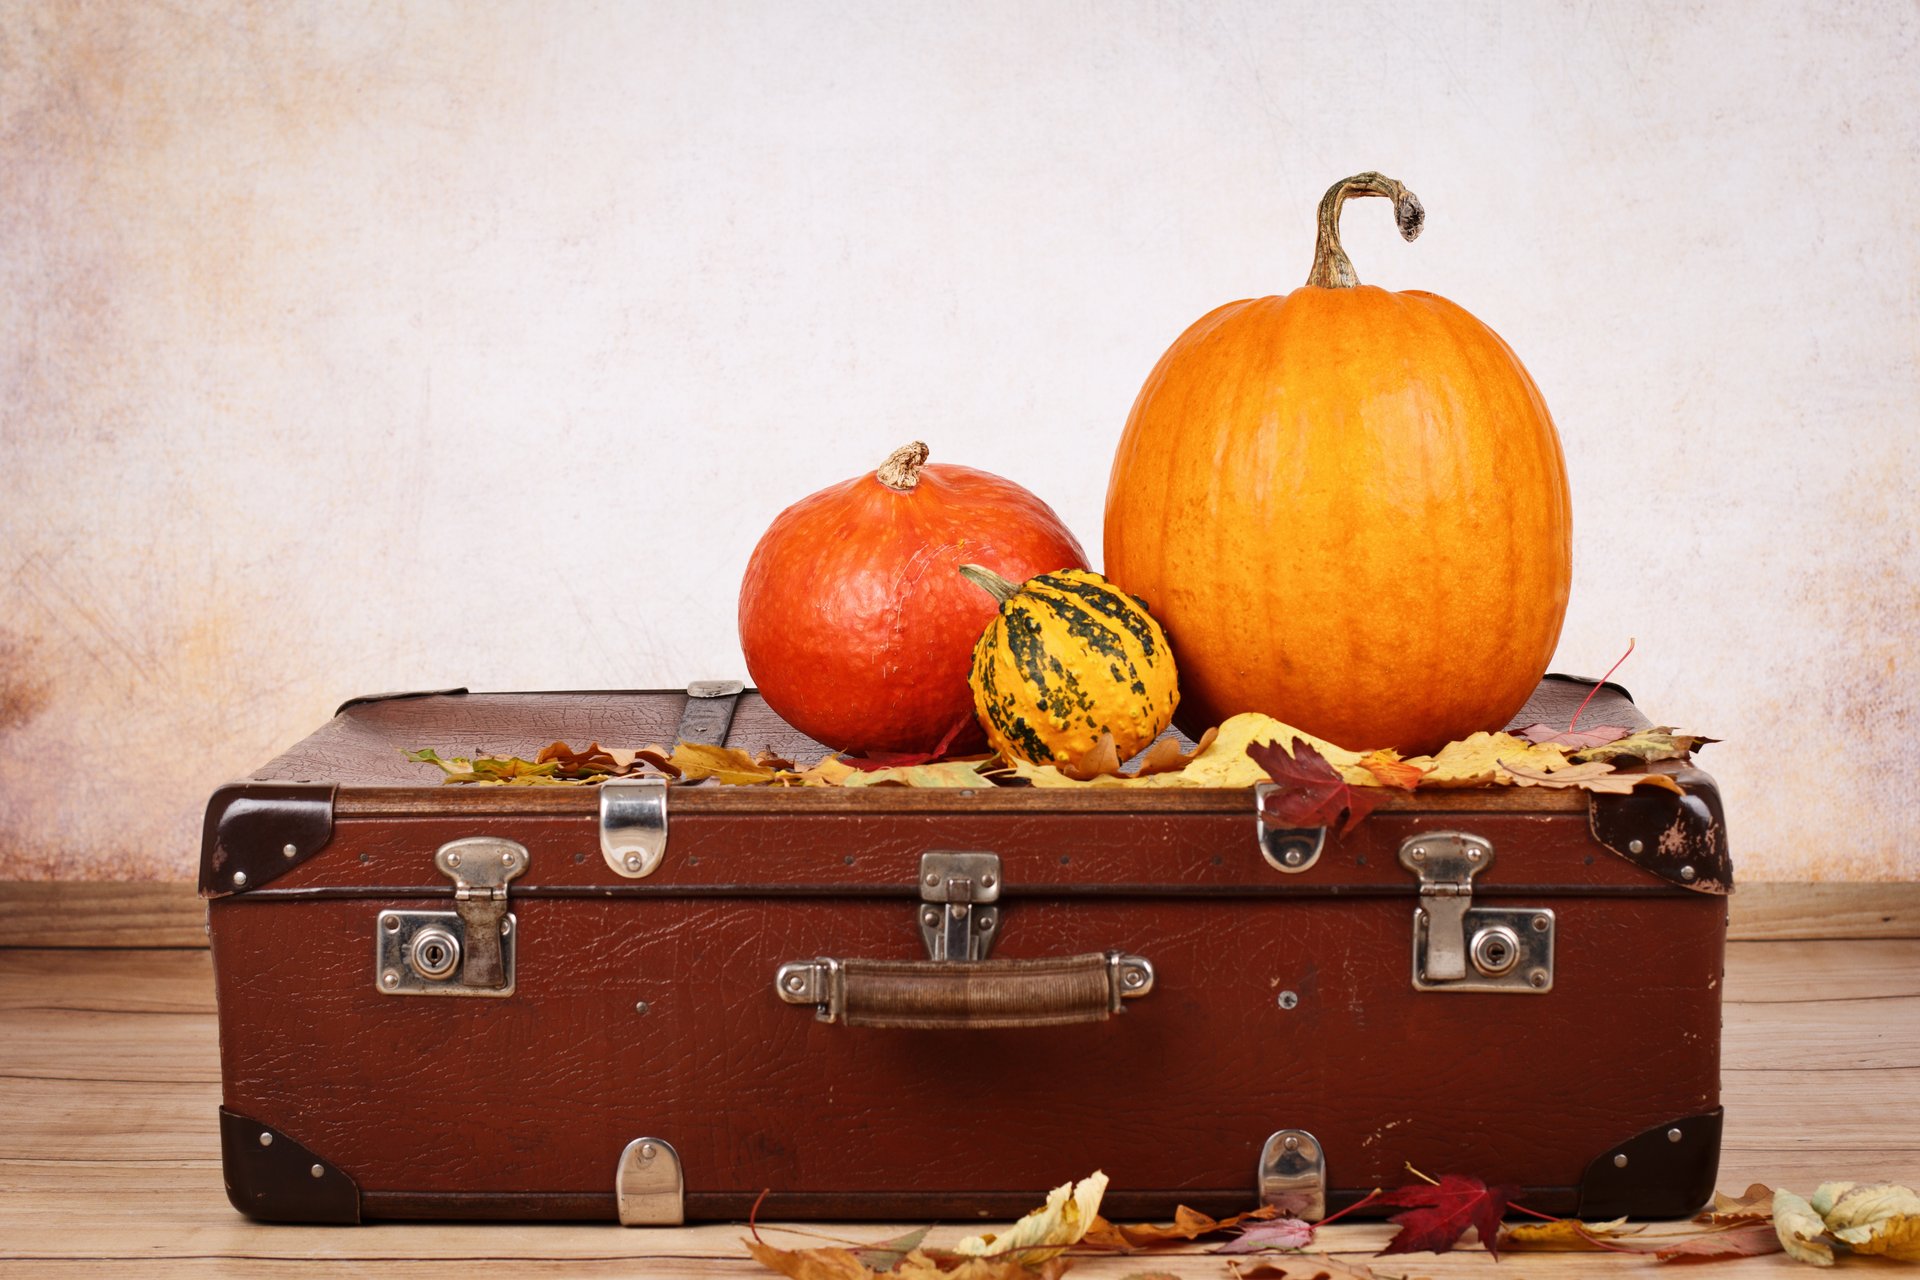 Vintage suitcase and pumpkins